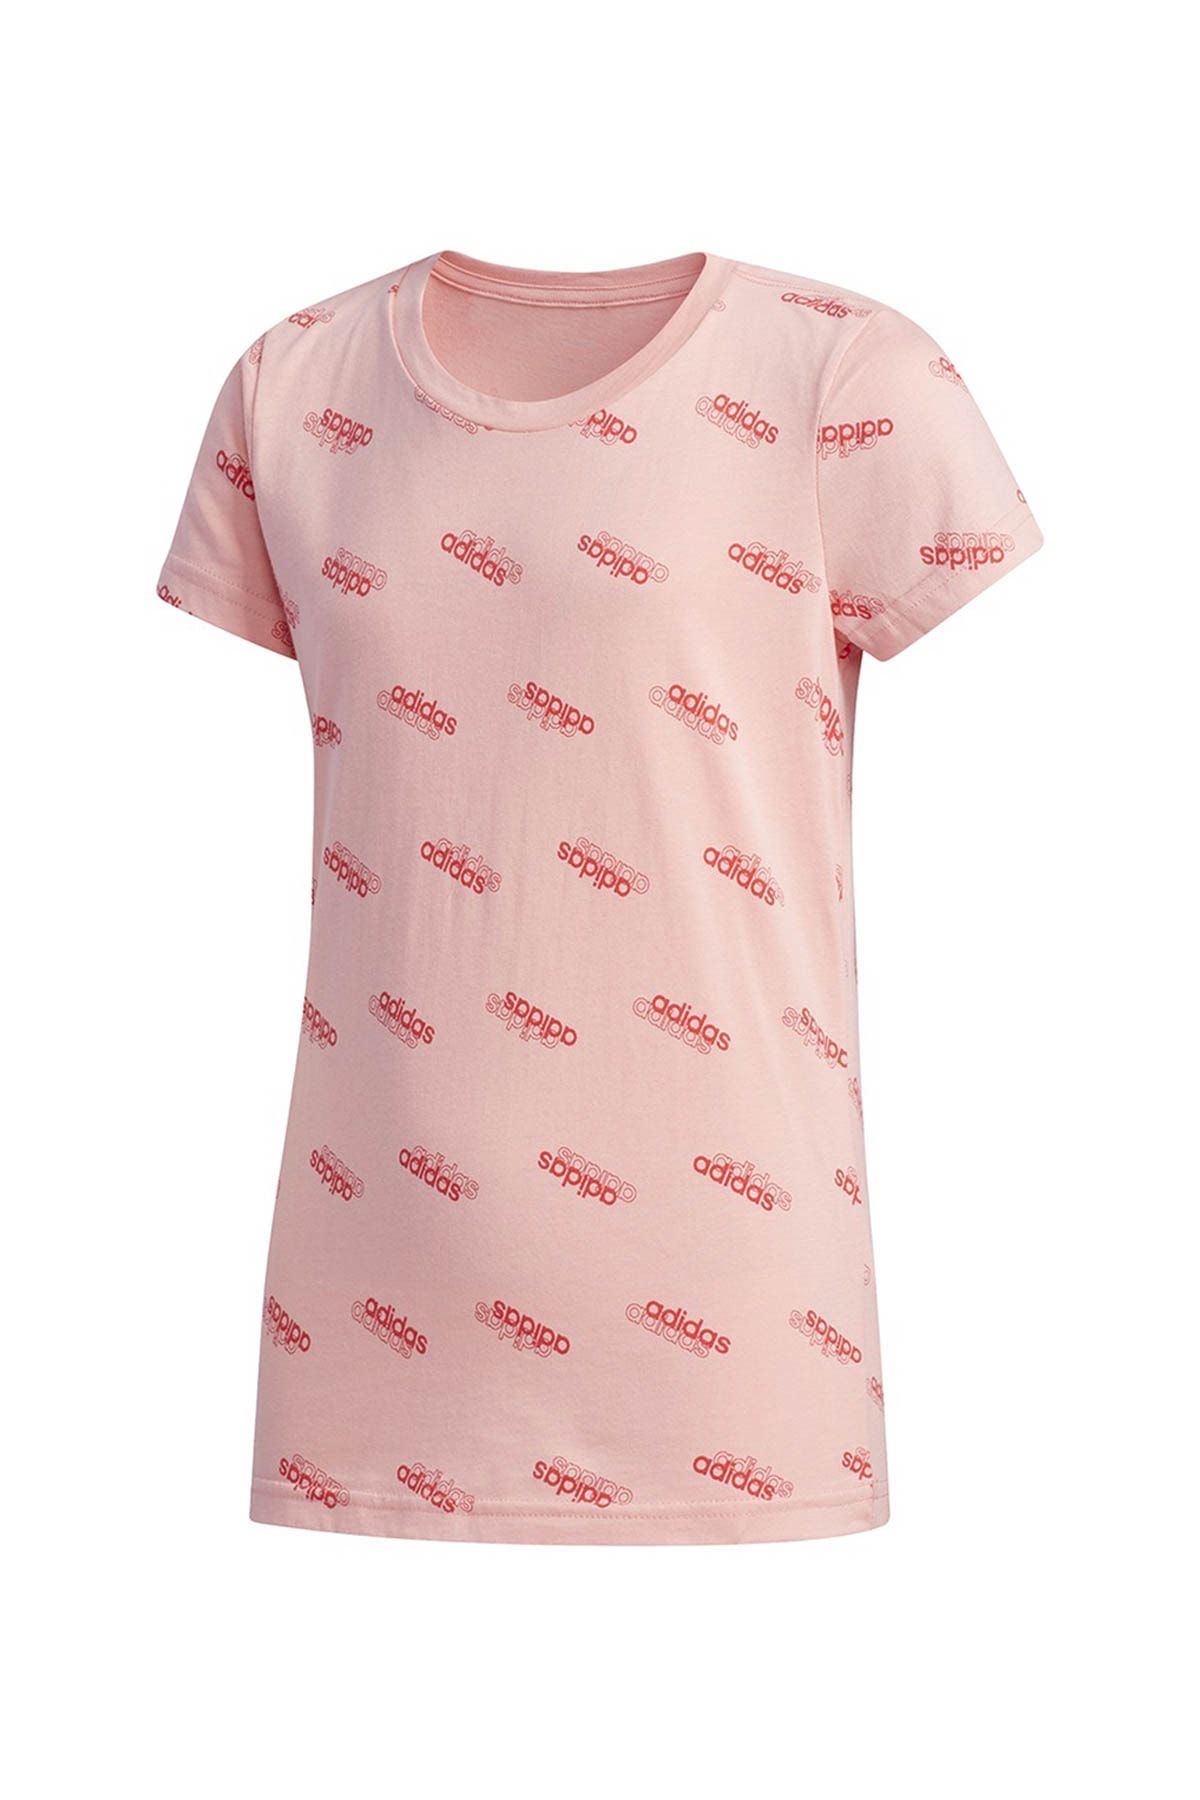 adidas YG FAV T Pembe Kız Çocuk T-Shirt 101117937